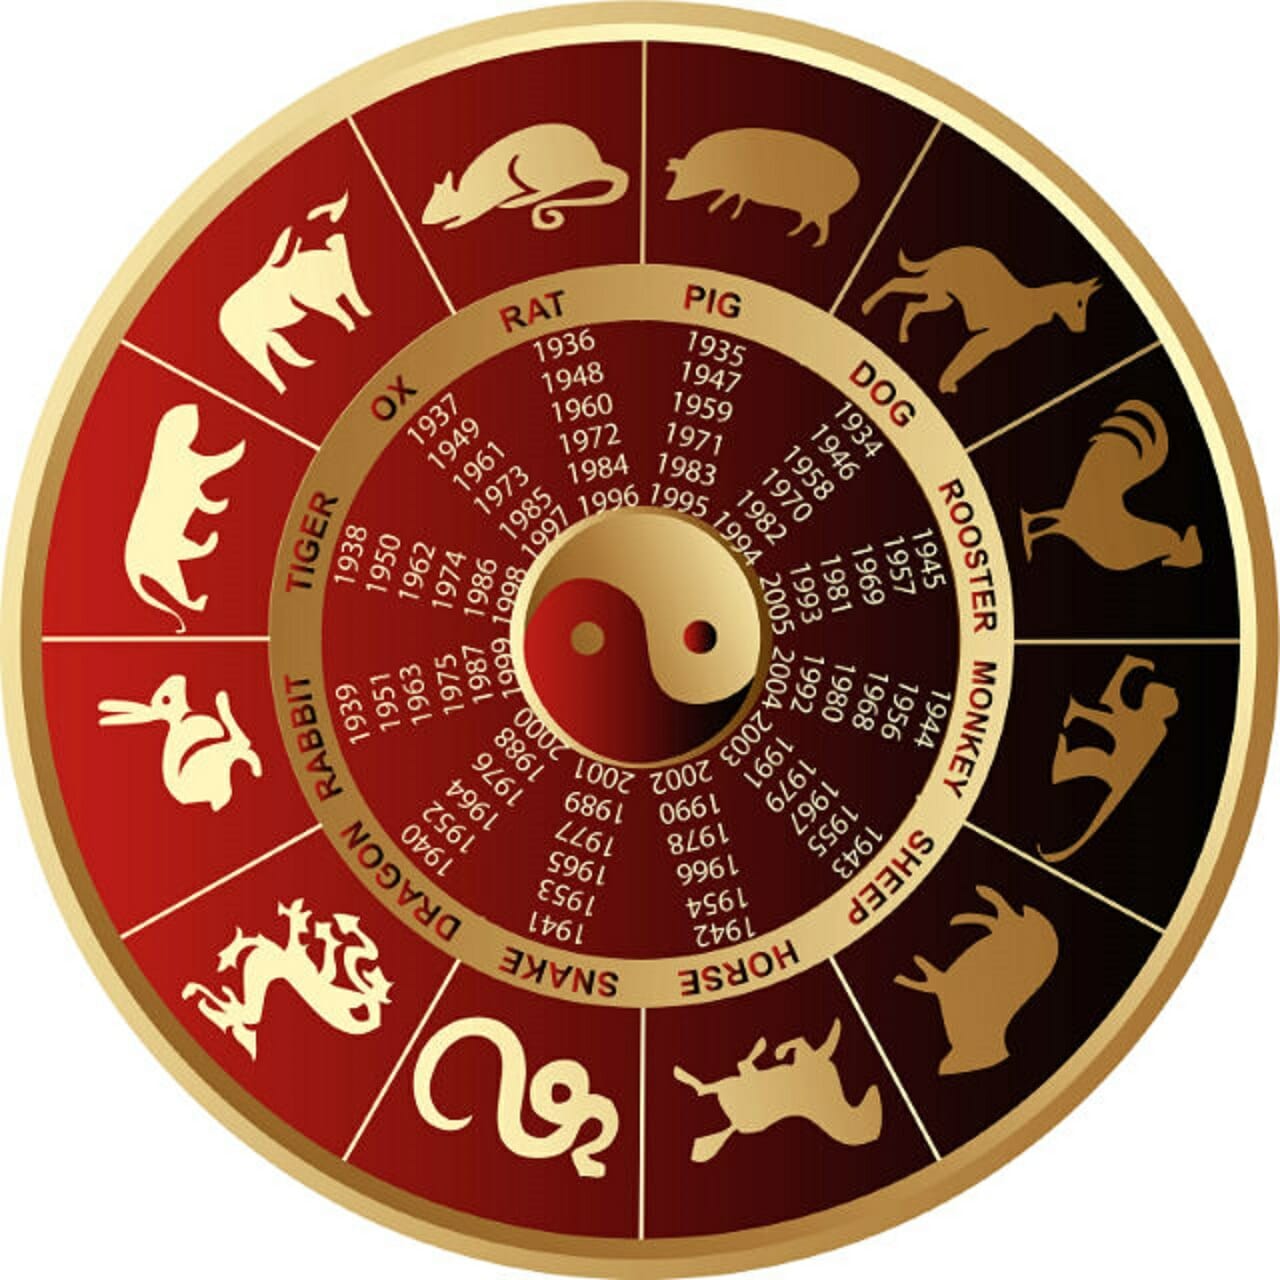 Zodiac chinezesc. Cele trei zodii protejate în luna octombrie